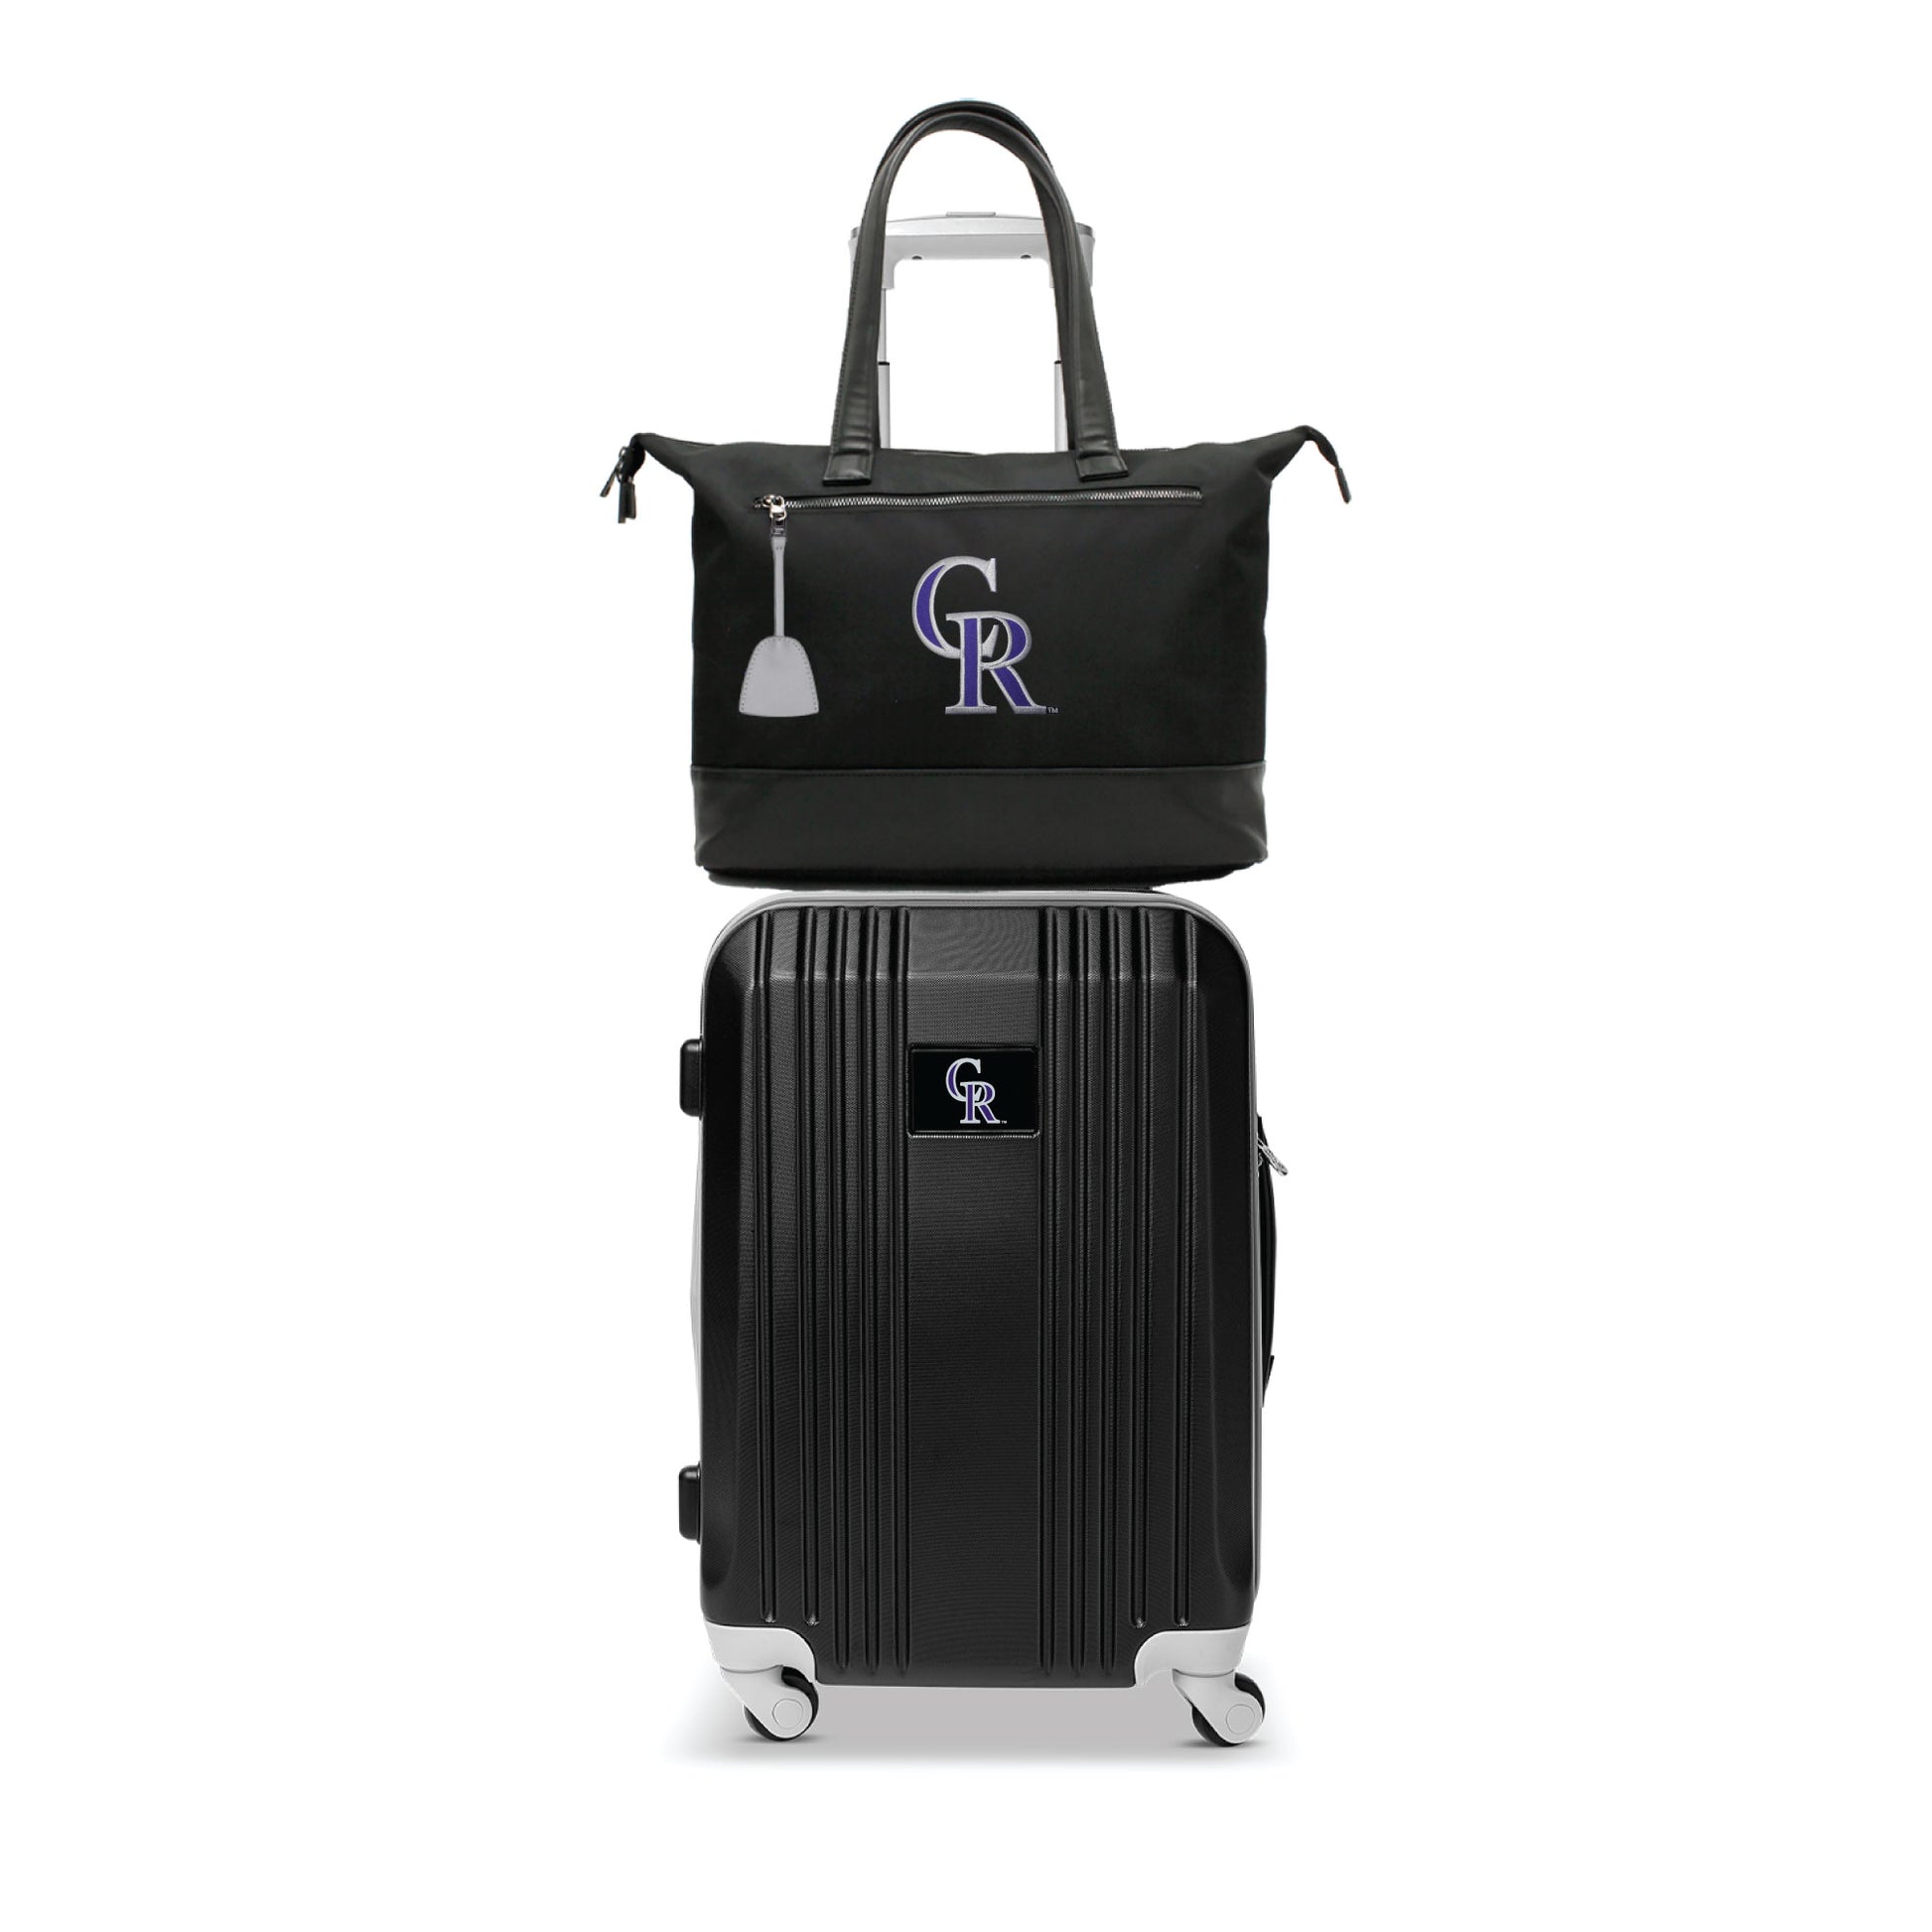 Colorado Rockies Premium Laptop Tote Bag and Luggage Set